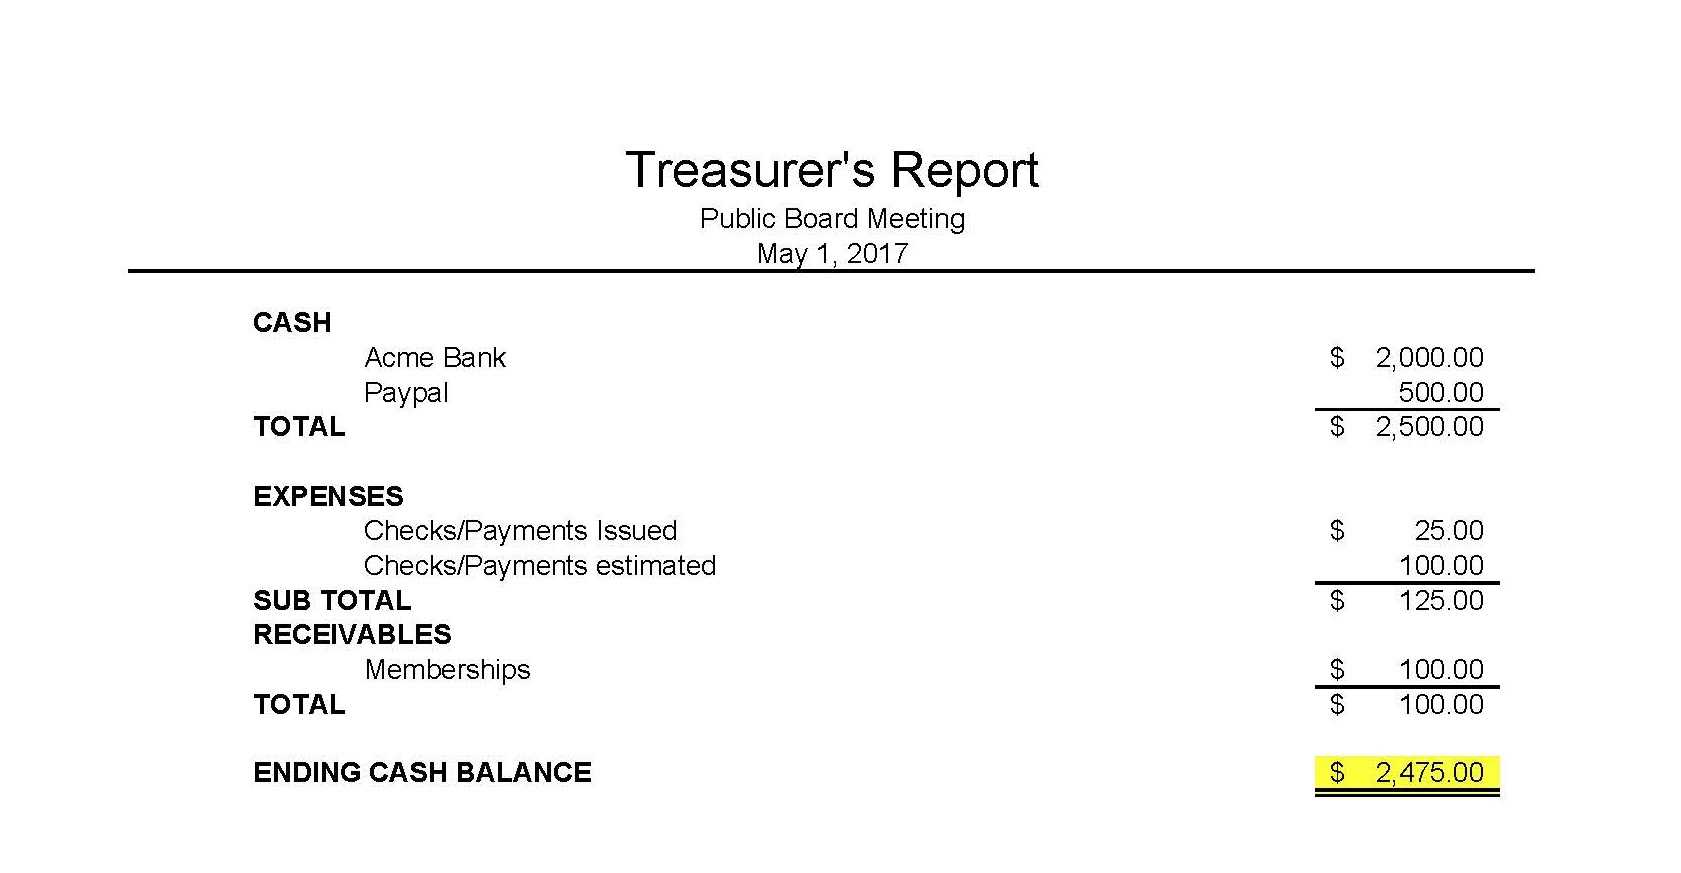 009 Treasurer Report Template Non Profit Sample Club In Treasurer Report Template Non Profit